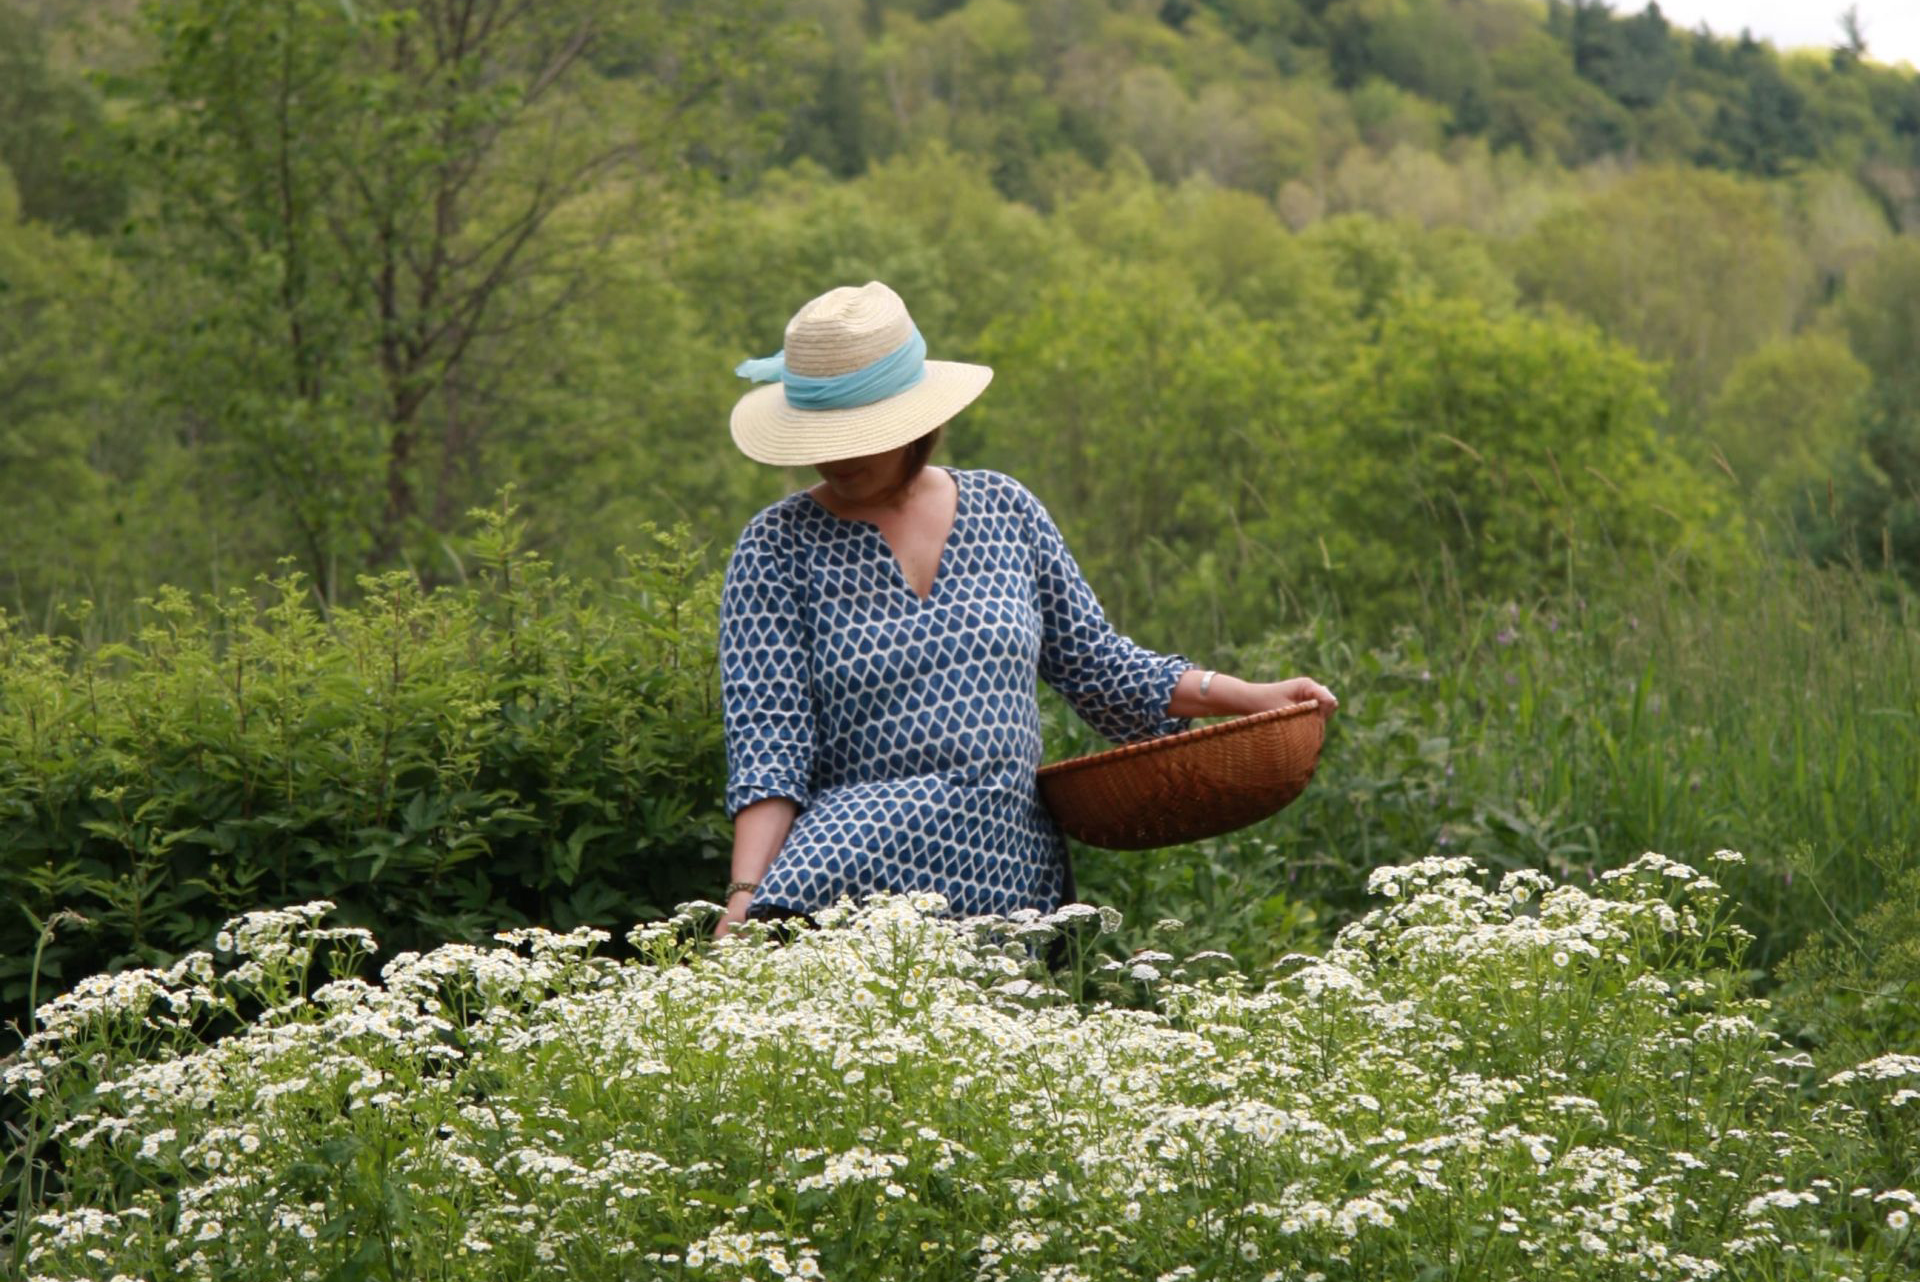 Femme avec panier dans champ fleuri